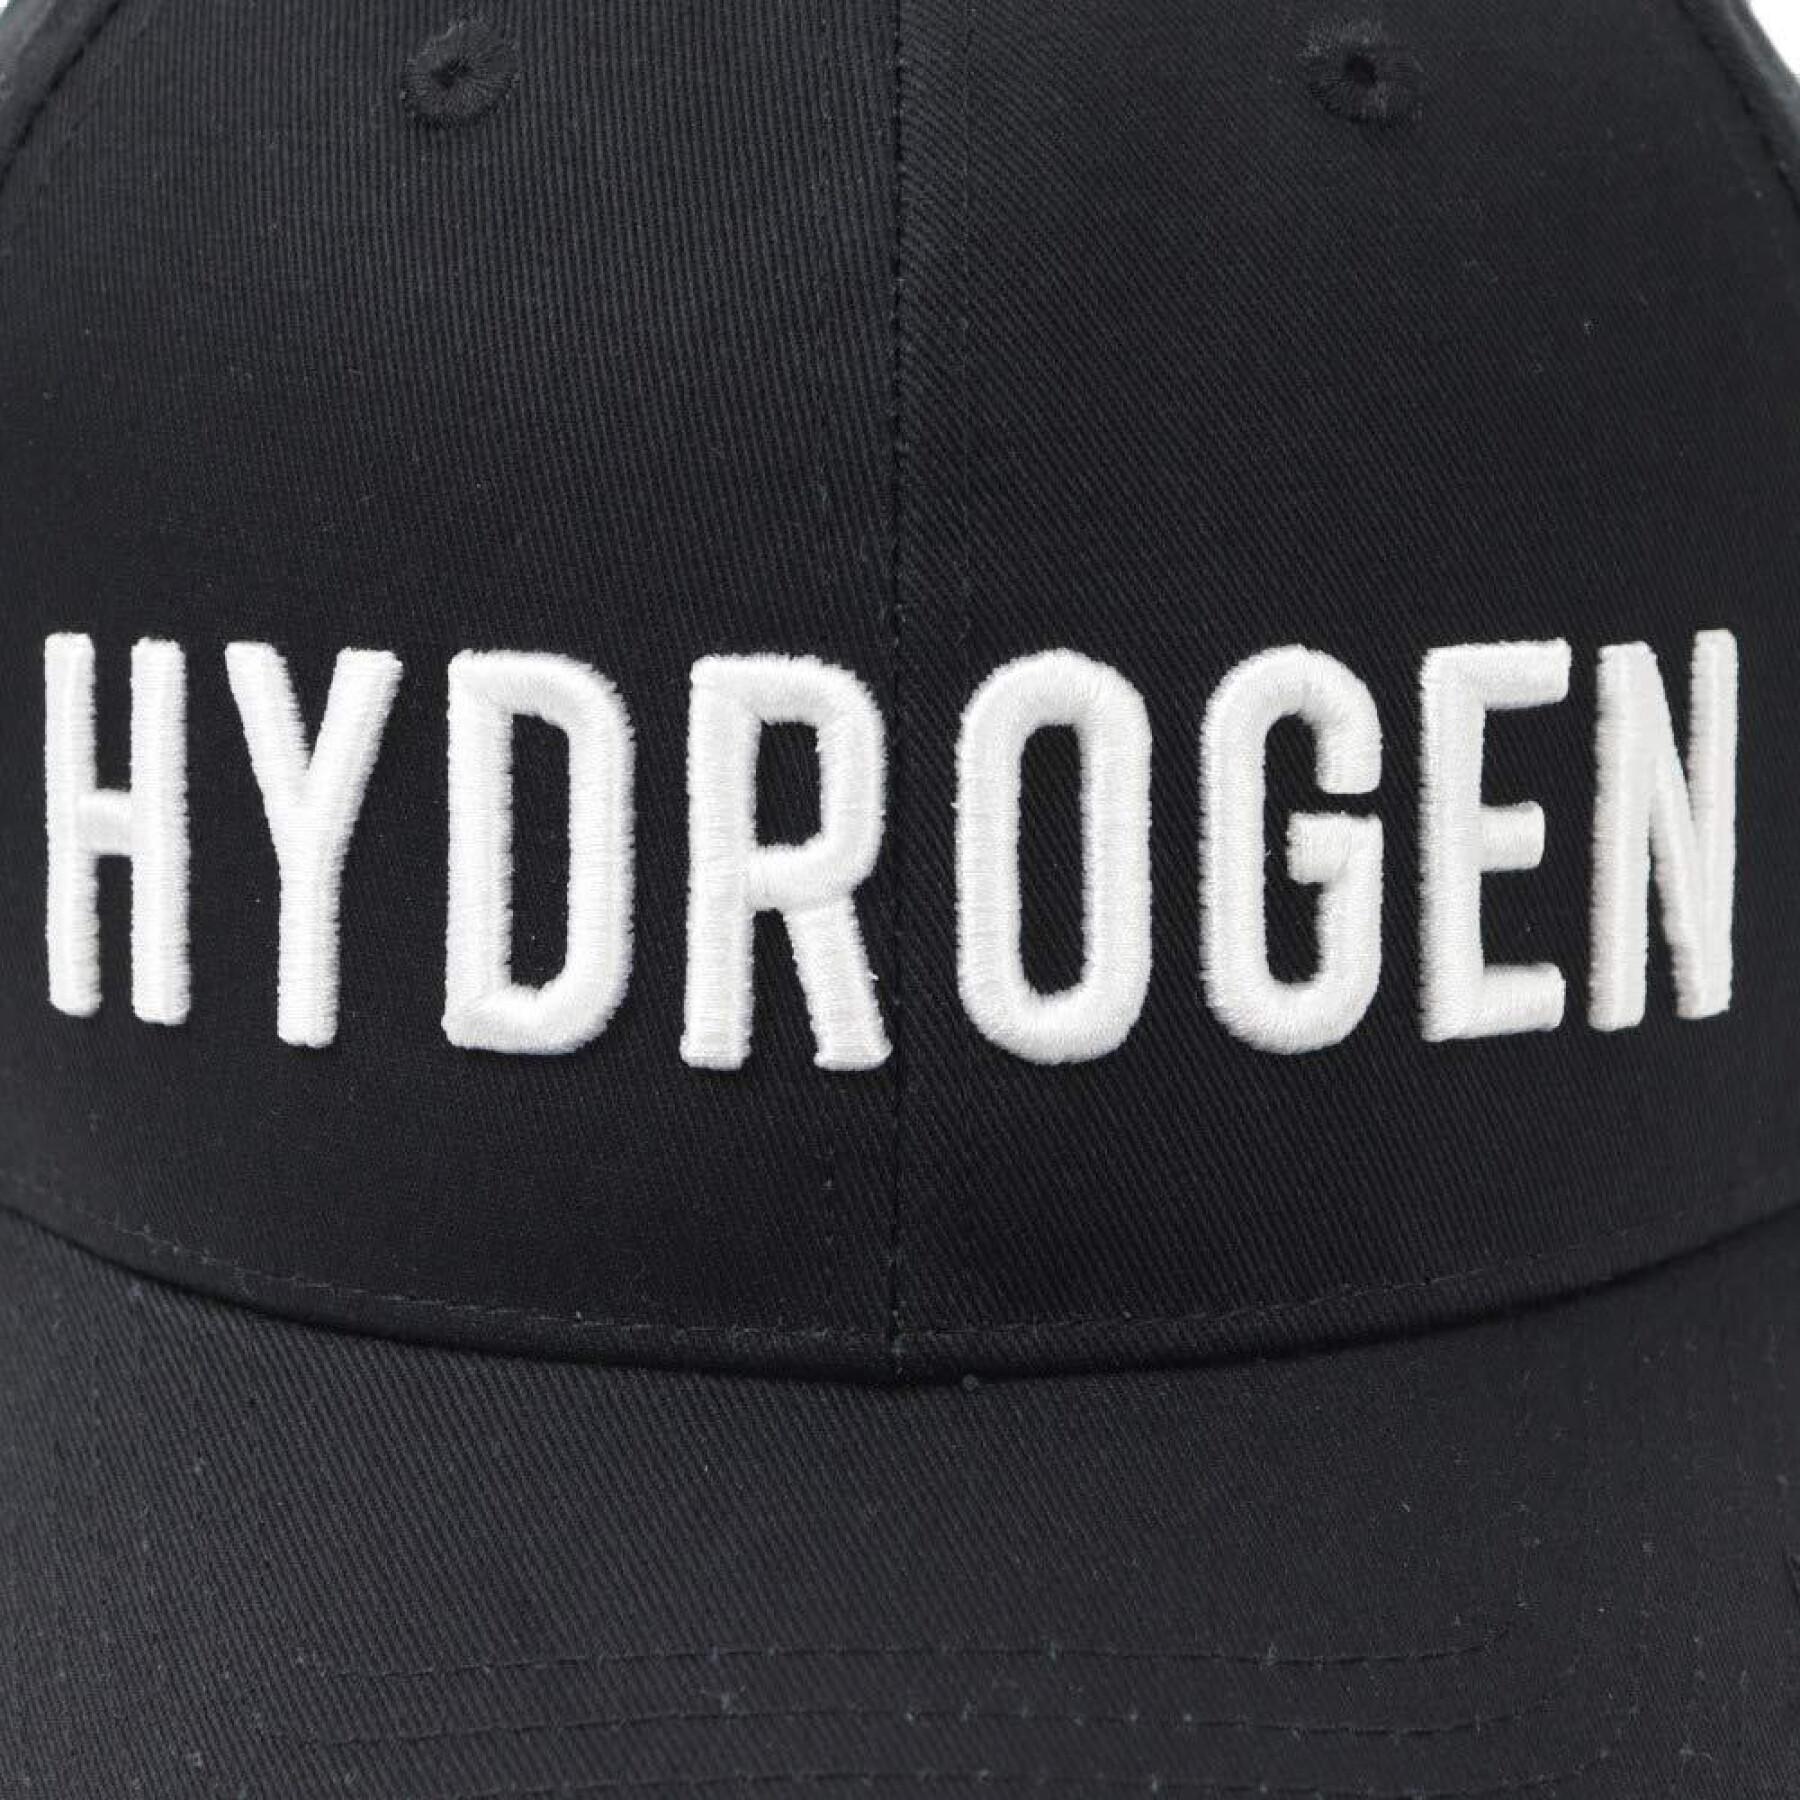 Cap Hydrogen Icon